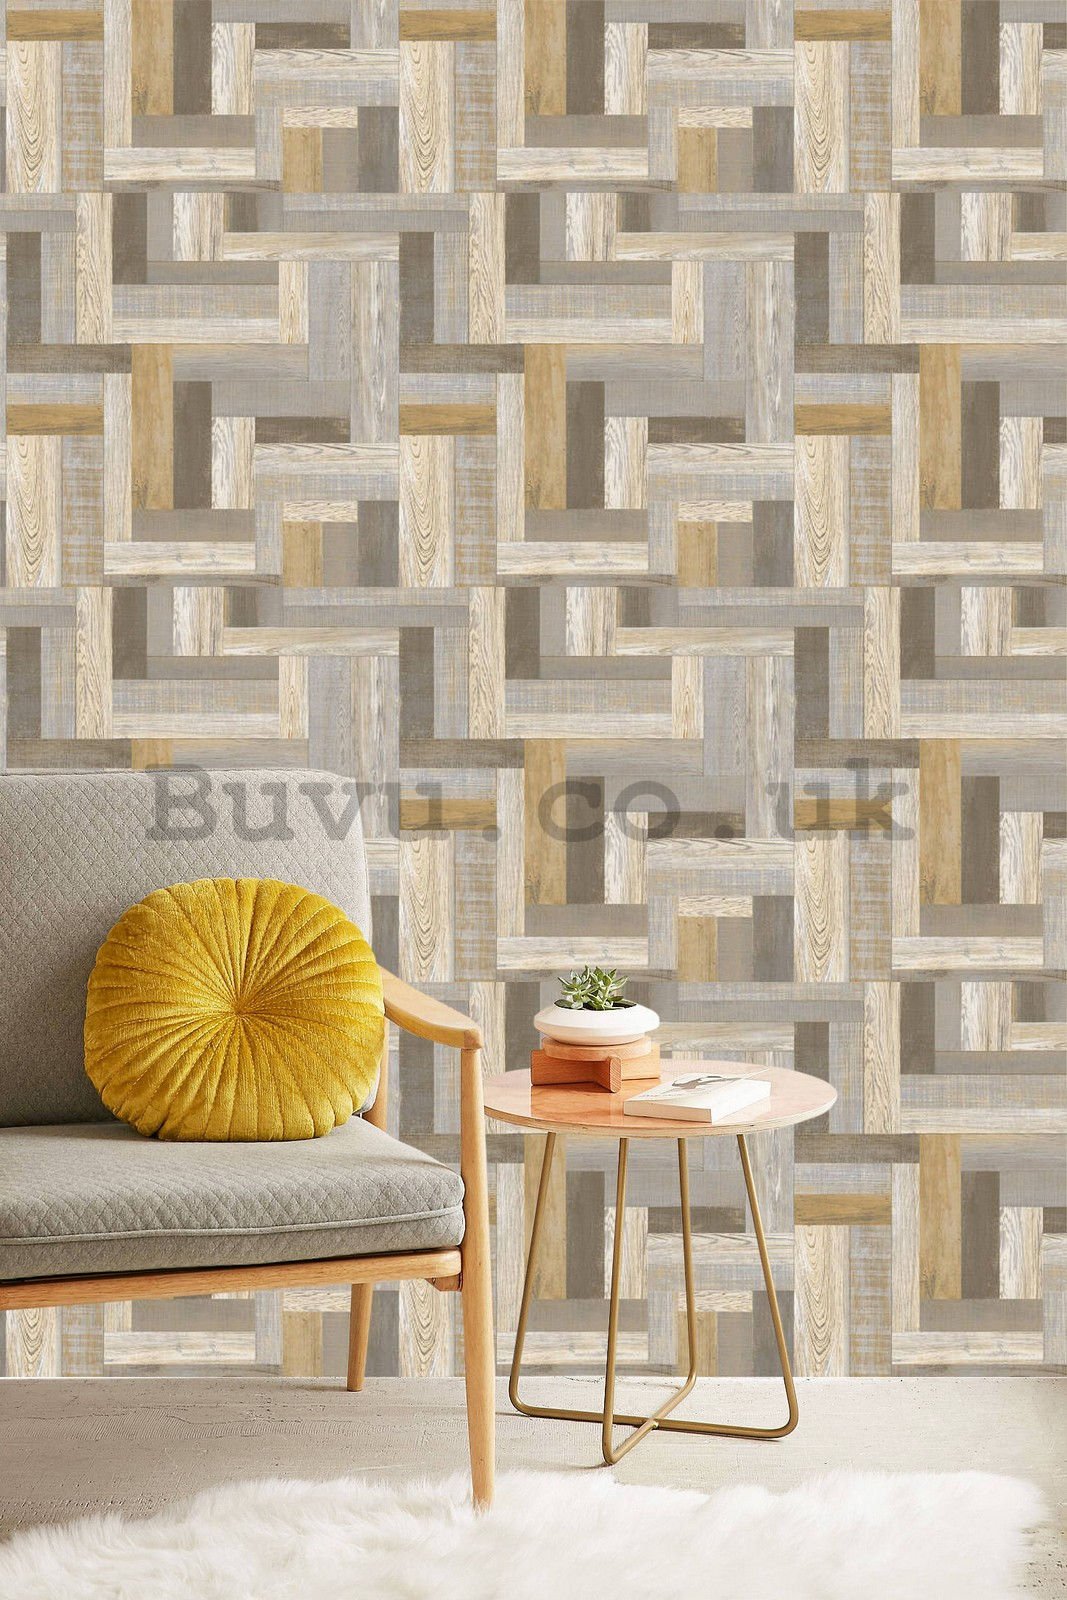 Vinyl wallpaper retro geometric patterns